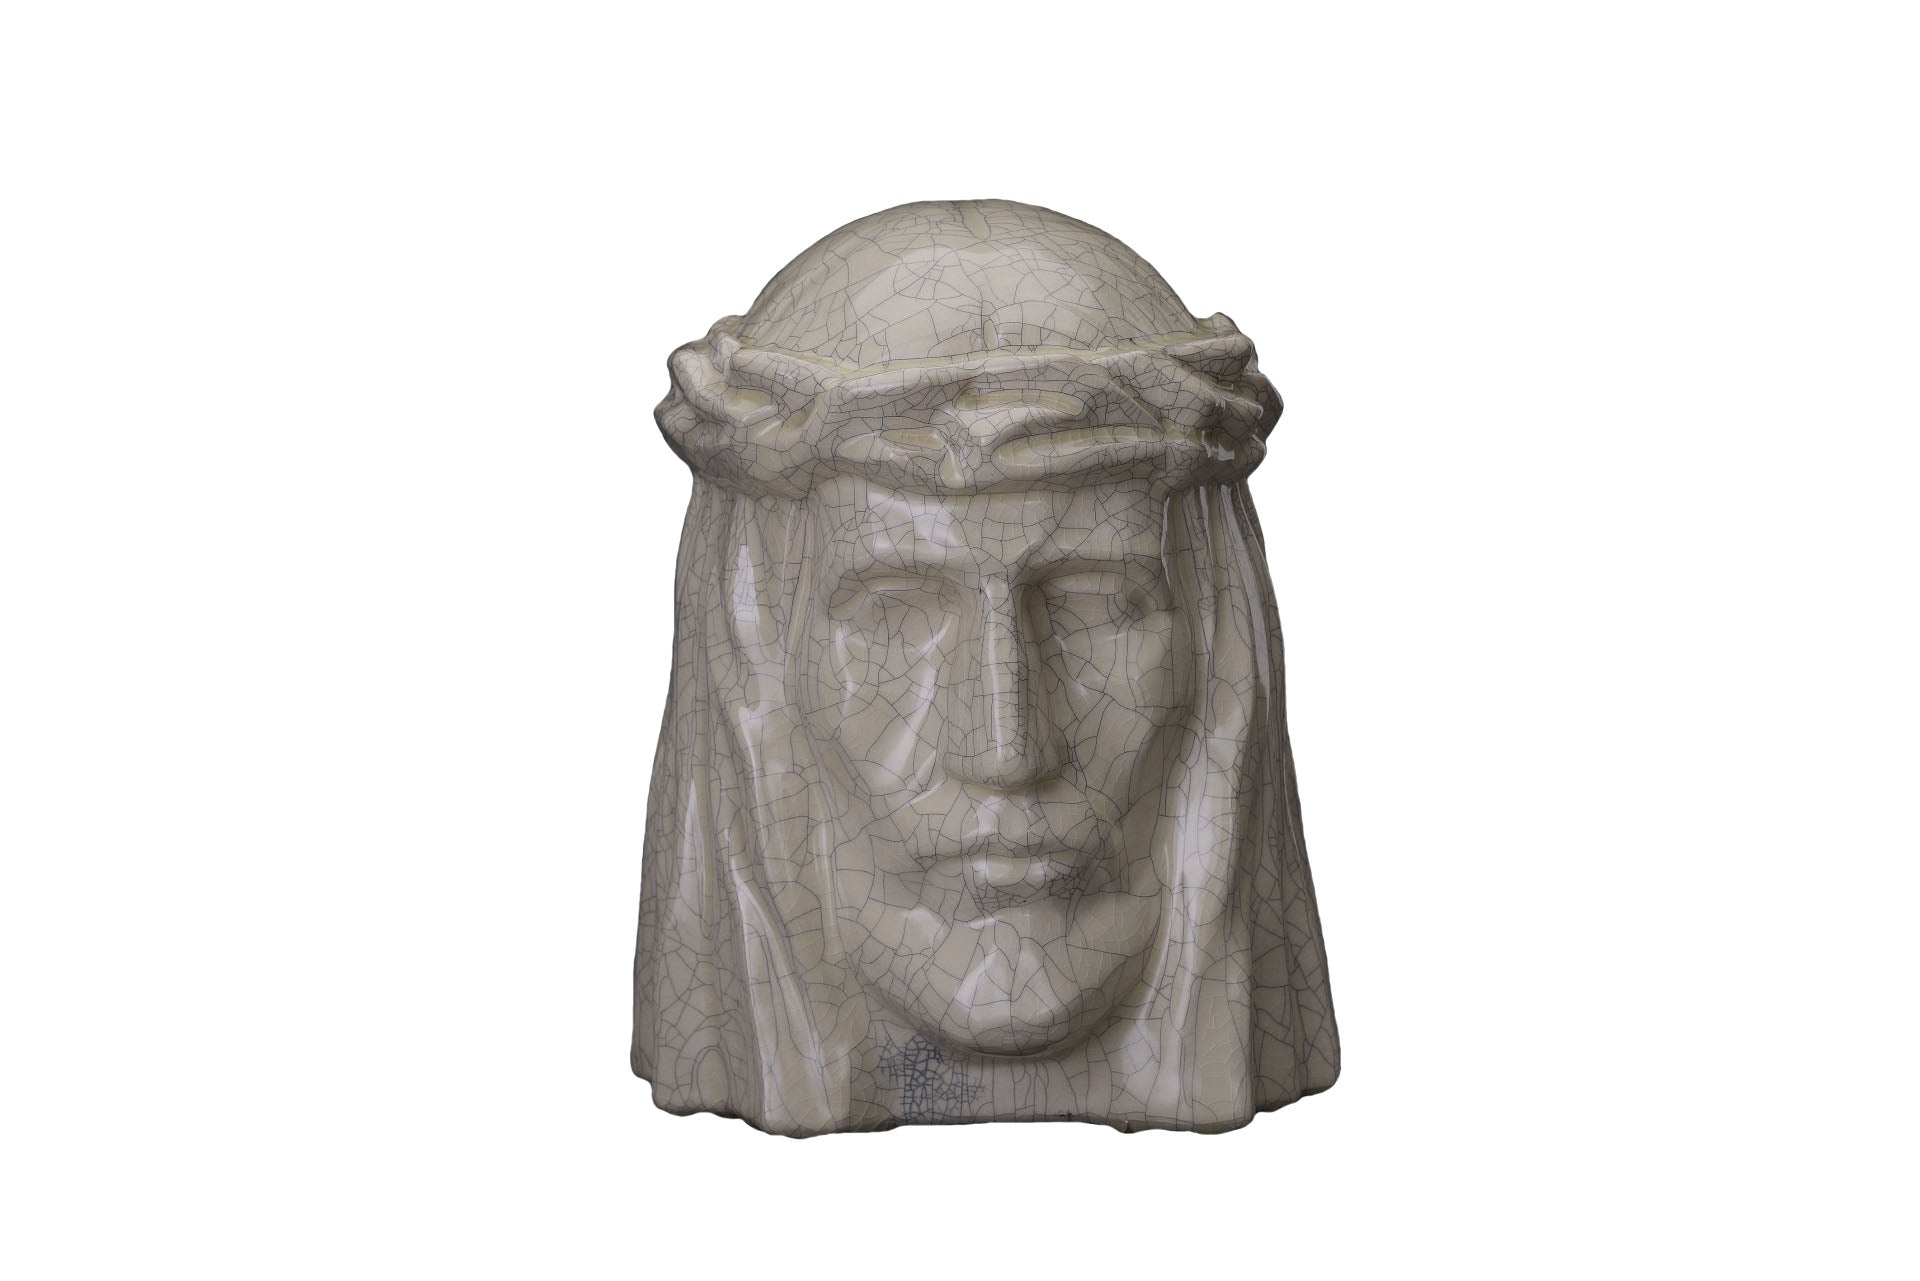 Urn Christ ceramic - 0